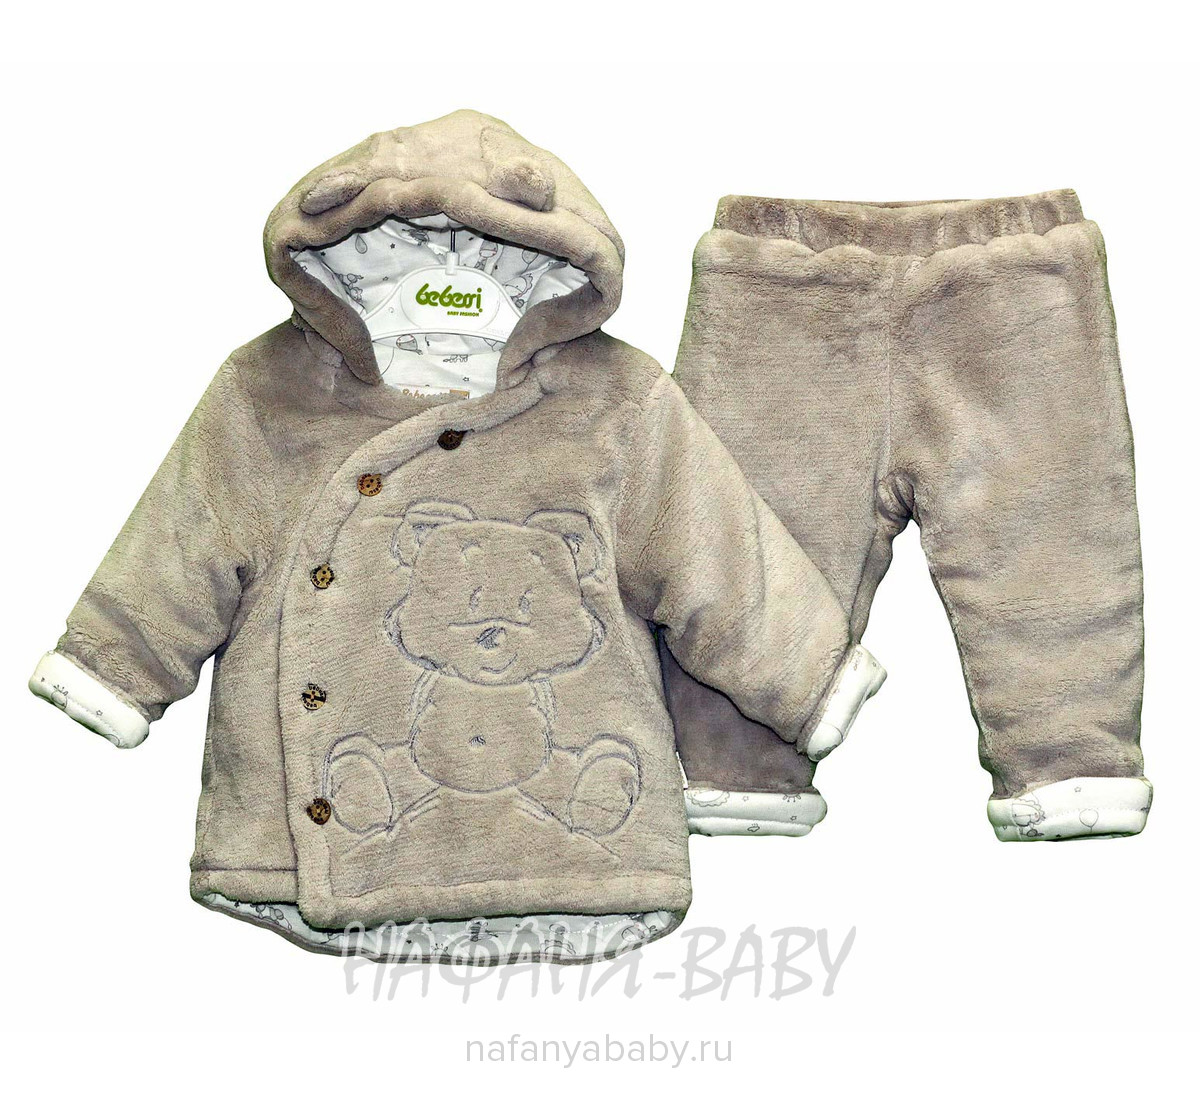 Теплый костюм для малышей BEBESSI арт: 3035, 0-12 мес, оптом Турция